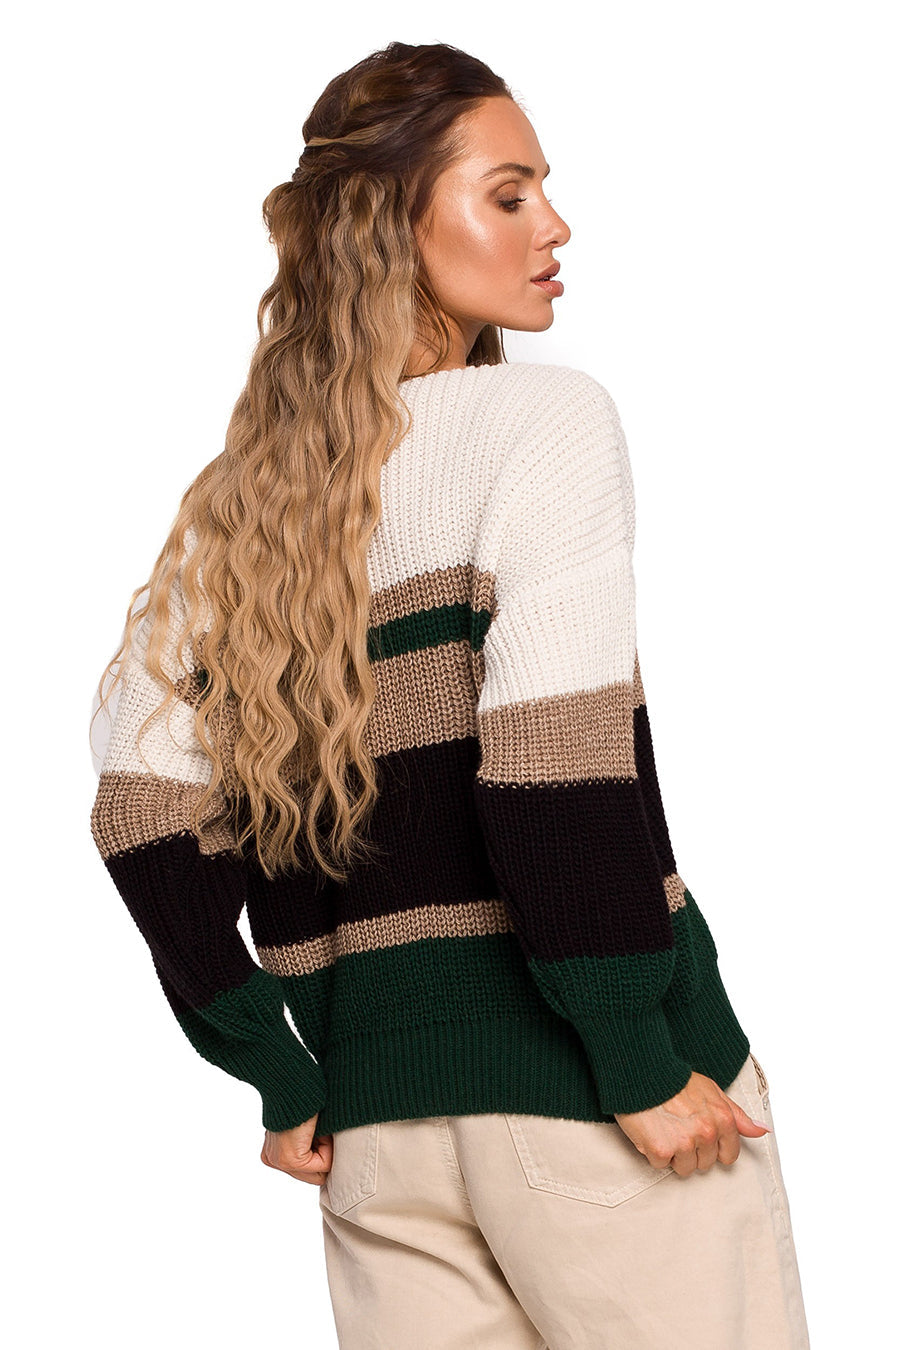 Дамски пуловер Aithne, Бял/Зелен 4